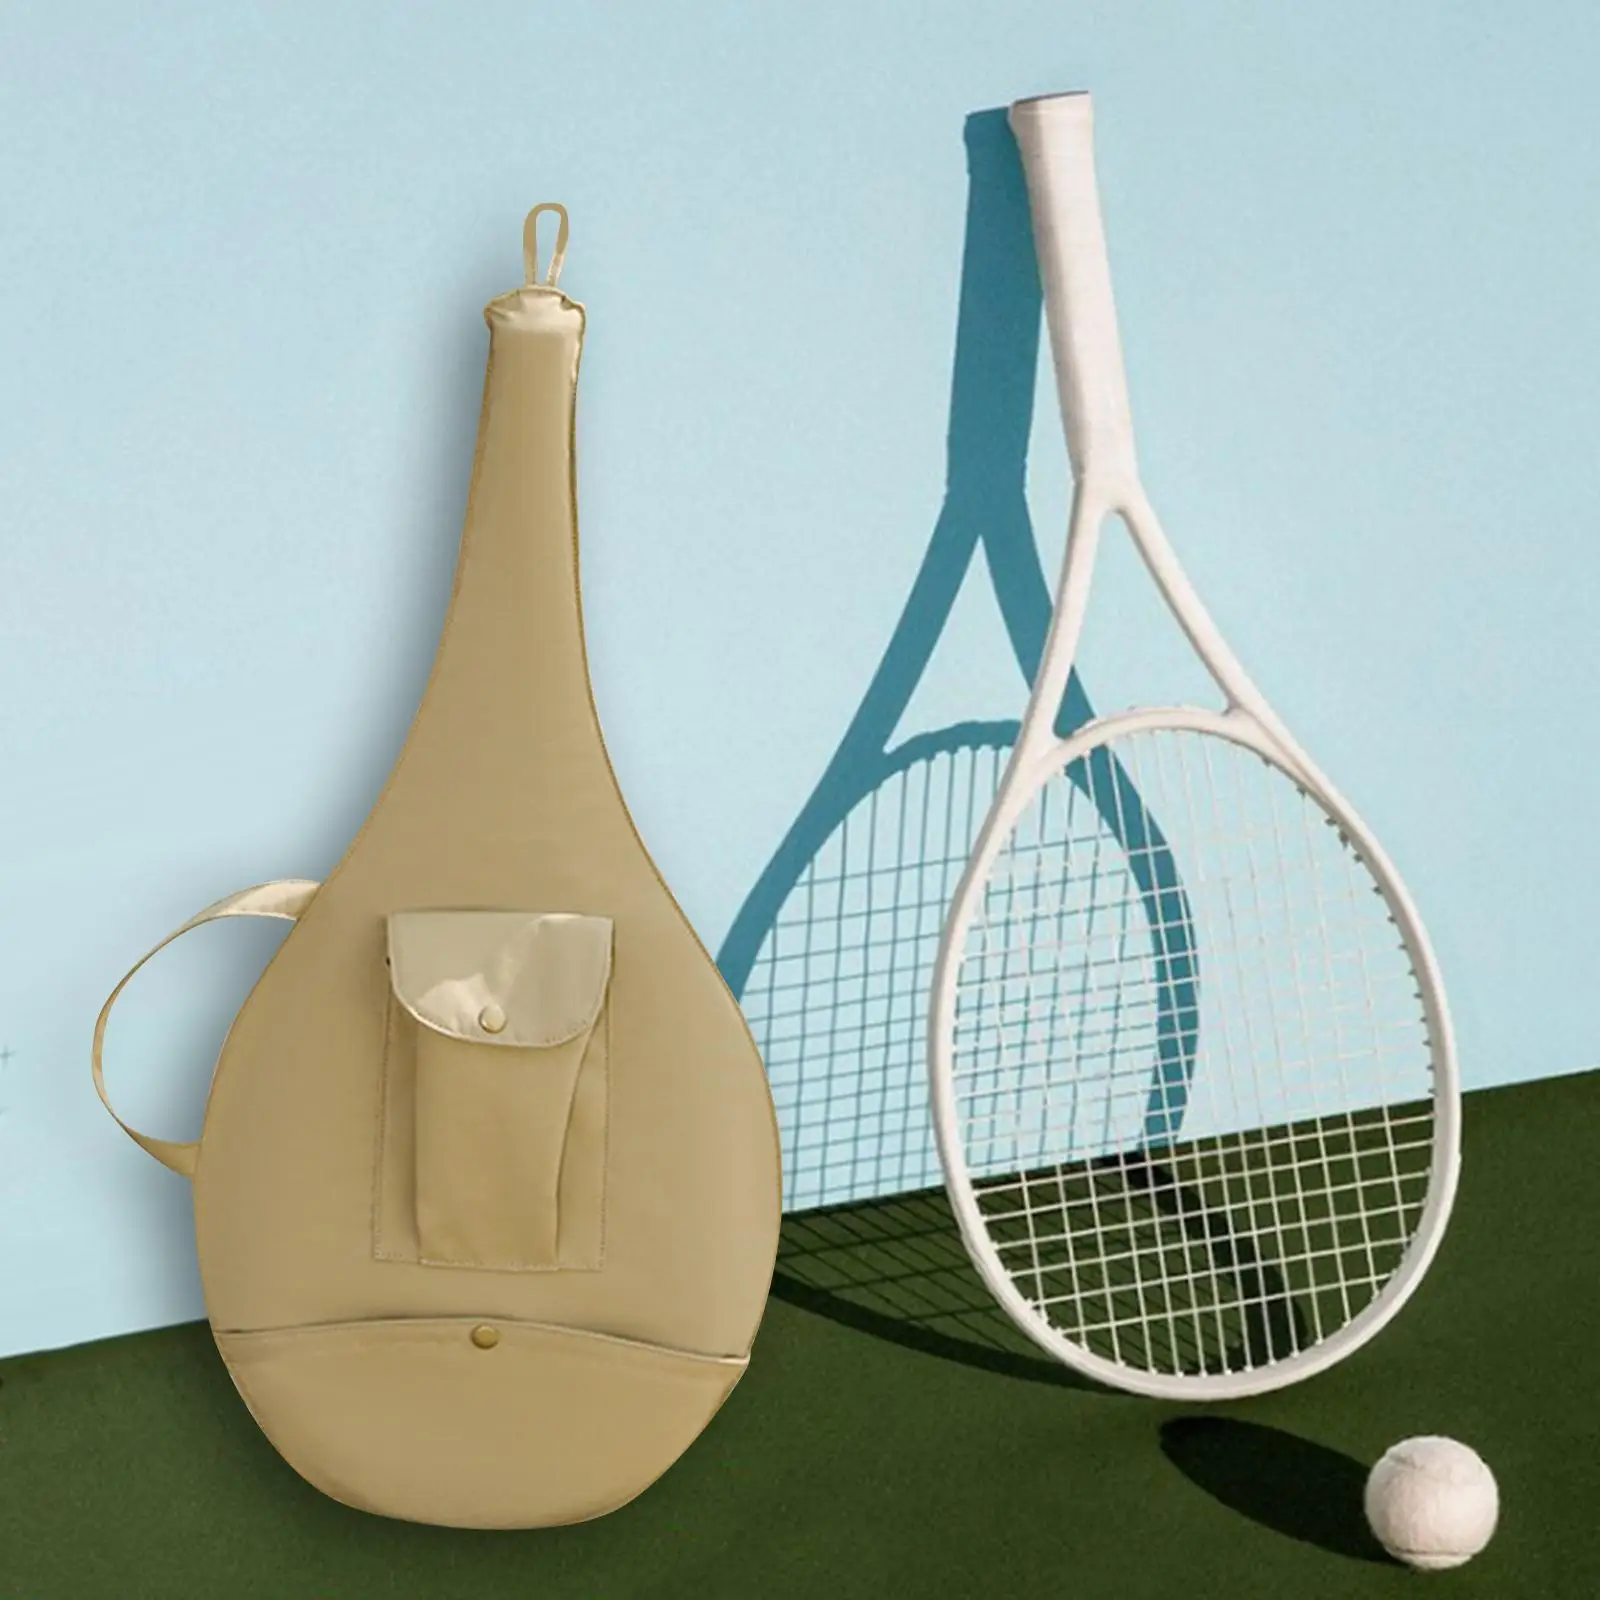 Tennis Racket Bag Sports Accessories Stylish with Storage Pocket Beginners Durable Carrier Handbag Adjustable Shoulder Bag